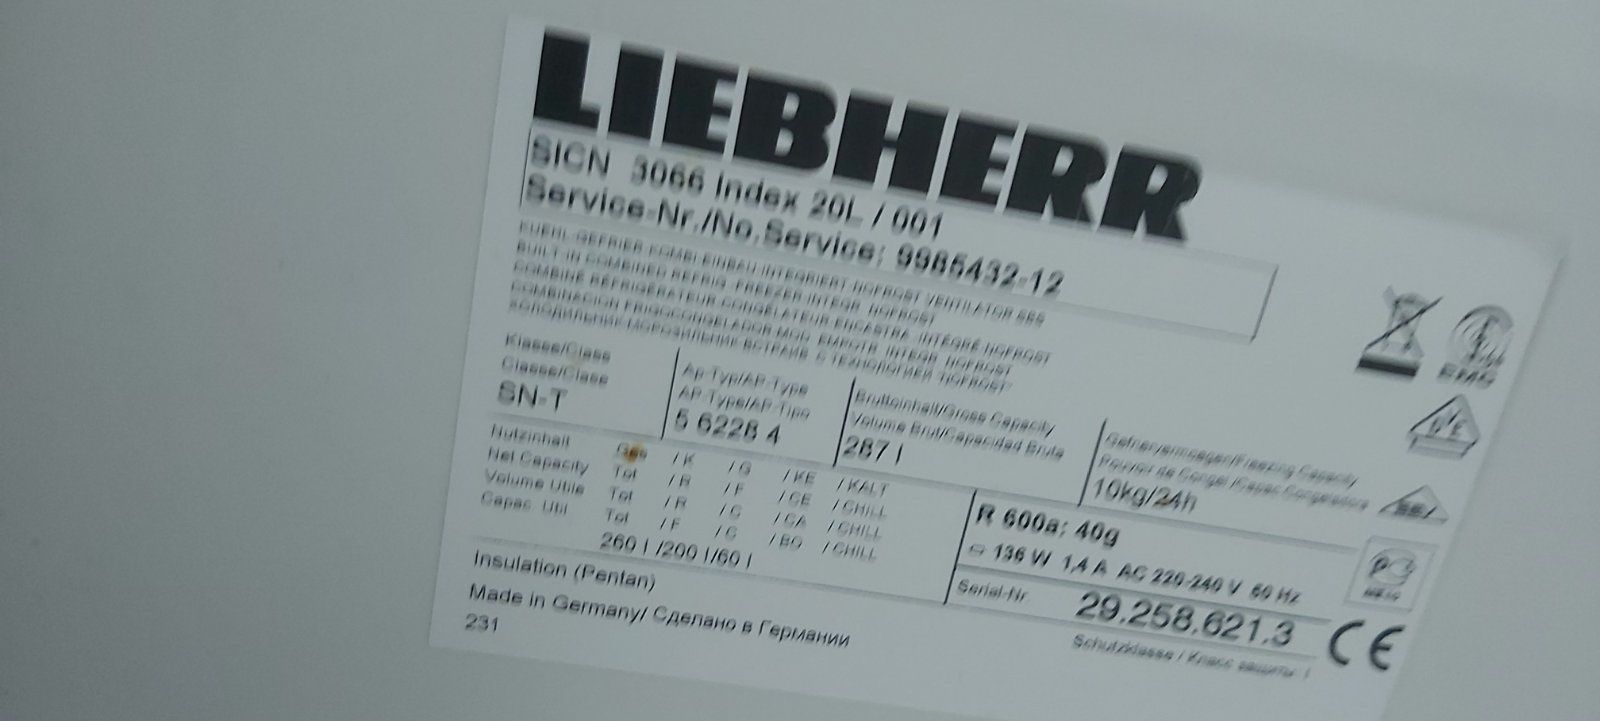 Вбудований холодильник Liebherr